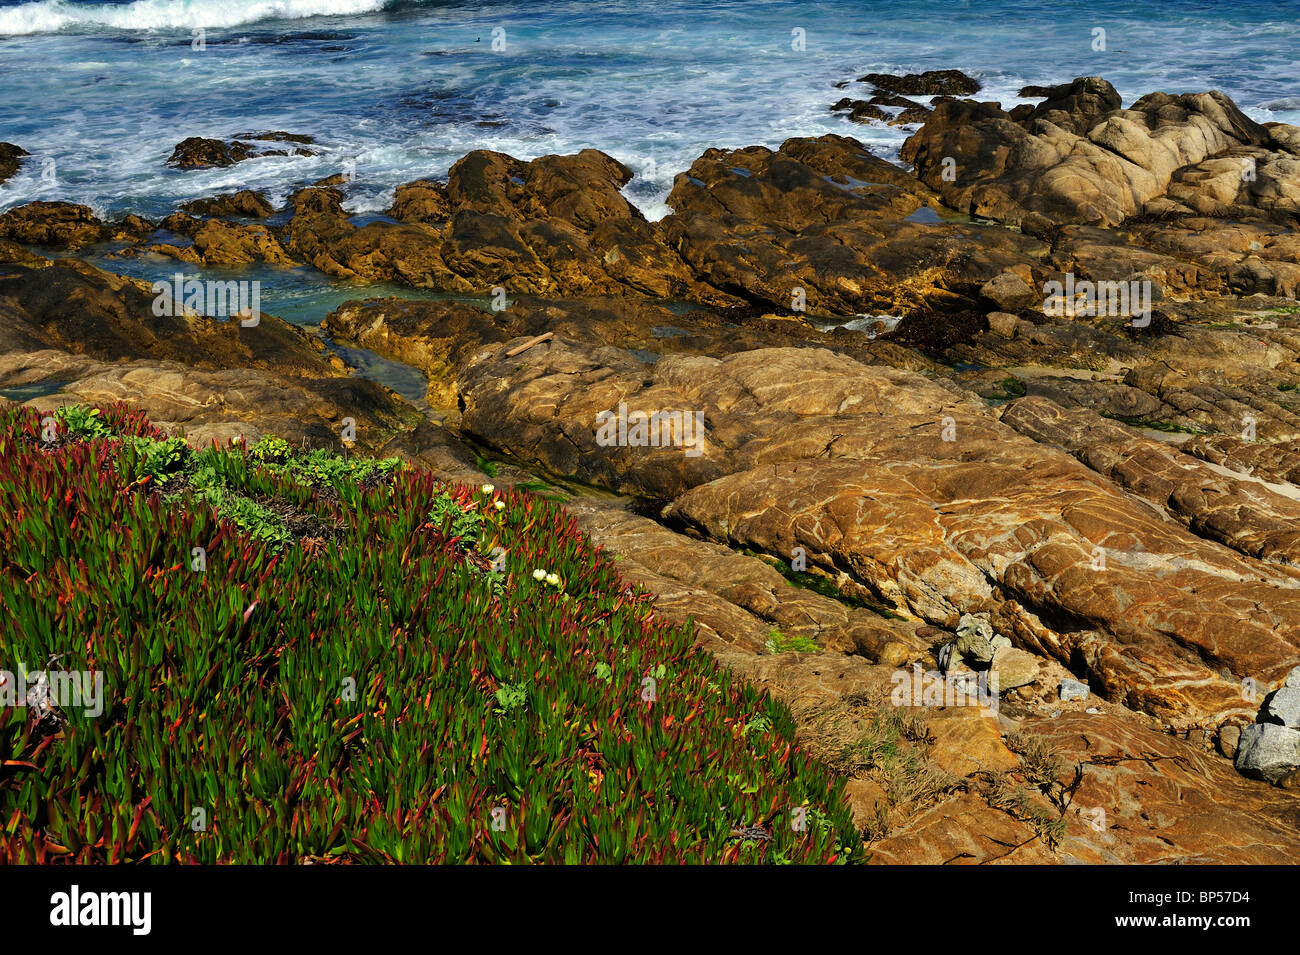 Wellen gegen Felsen Pebble Beach Kalifornien Gezeitenbecken Meer Fig Khoi Chilensis Iceplant Khoi aequilaterus Stockfoto